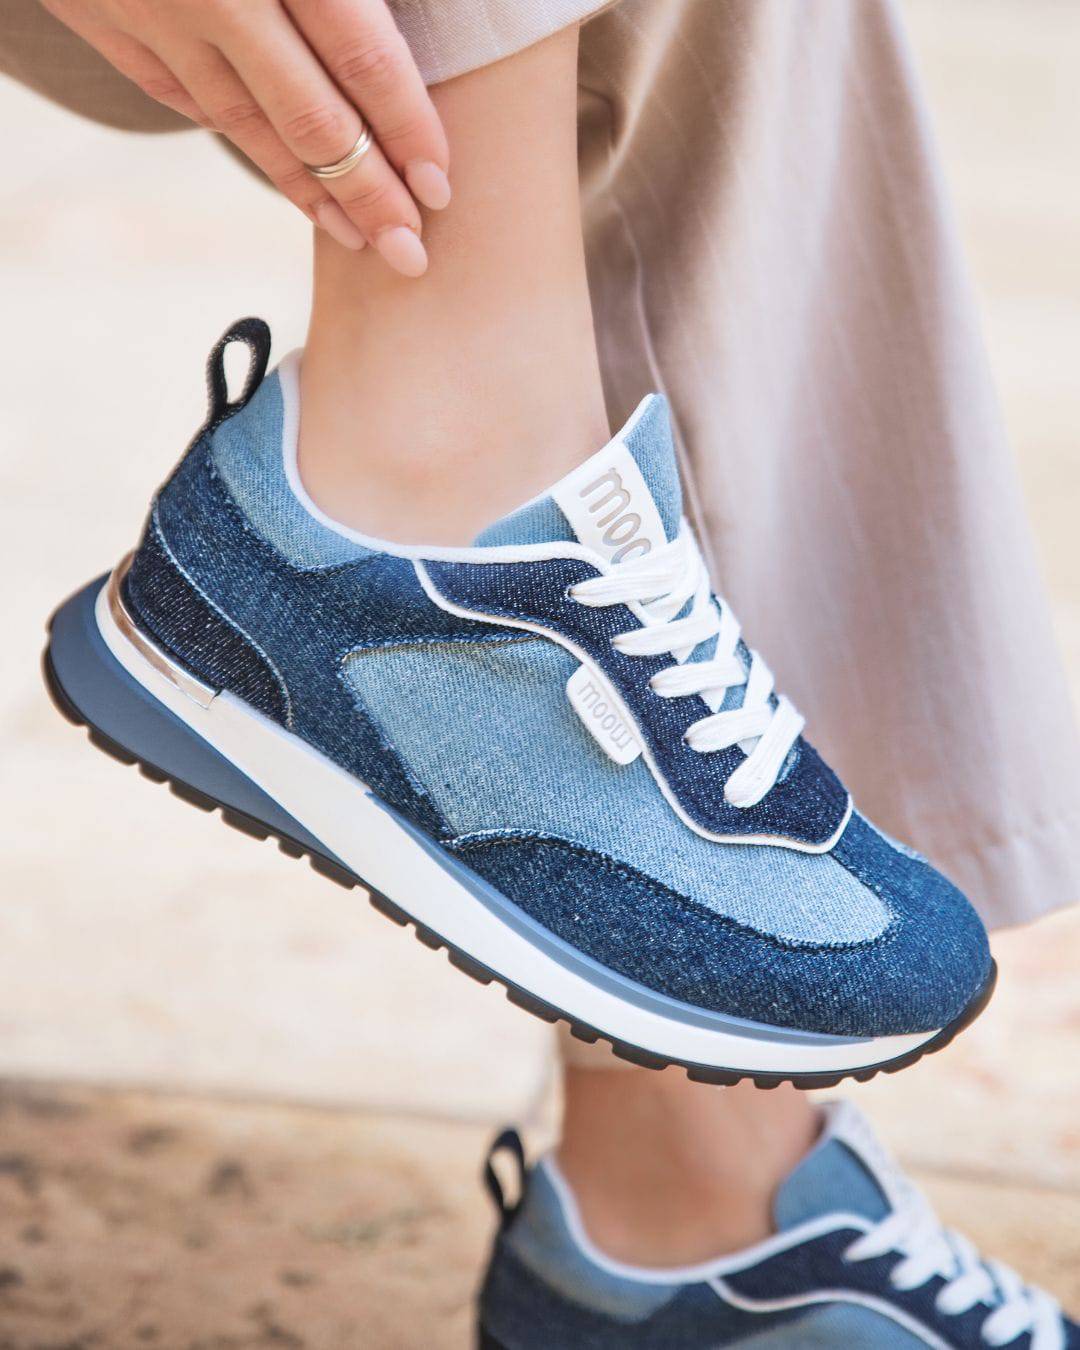 Damen-Sneaker in Denim-Blau mit Jeans-Schnürsenkeln - Marilou - Casualmode.de